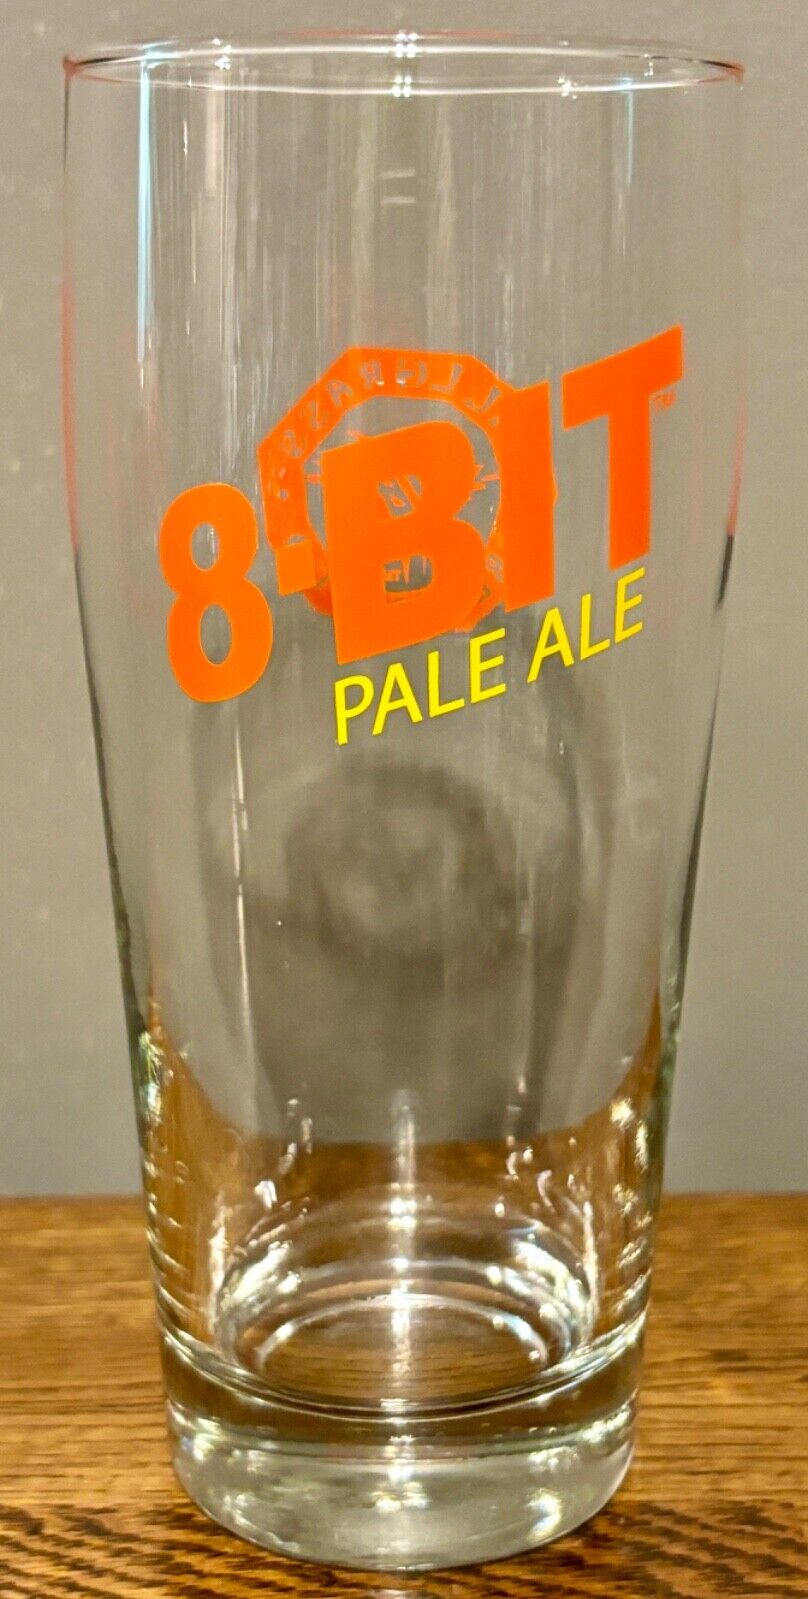 NEW Tallgrass Brewing Co. 8-Bit Pale Ale Pint Glass